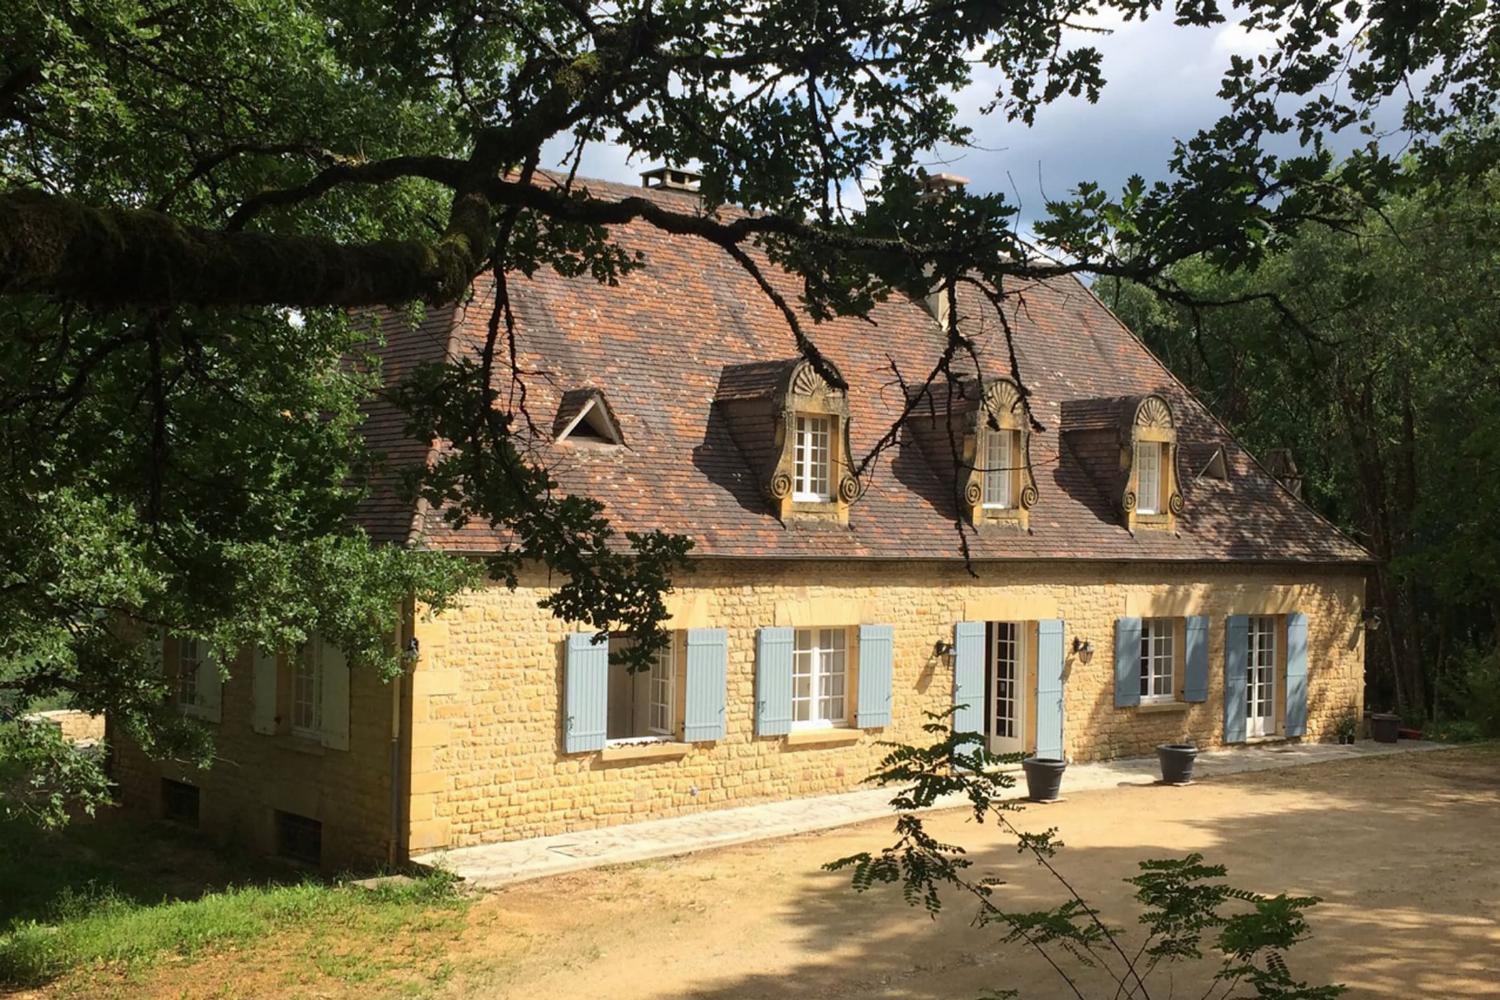 Rental accommodation in Dordogne